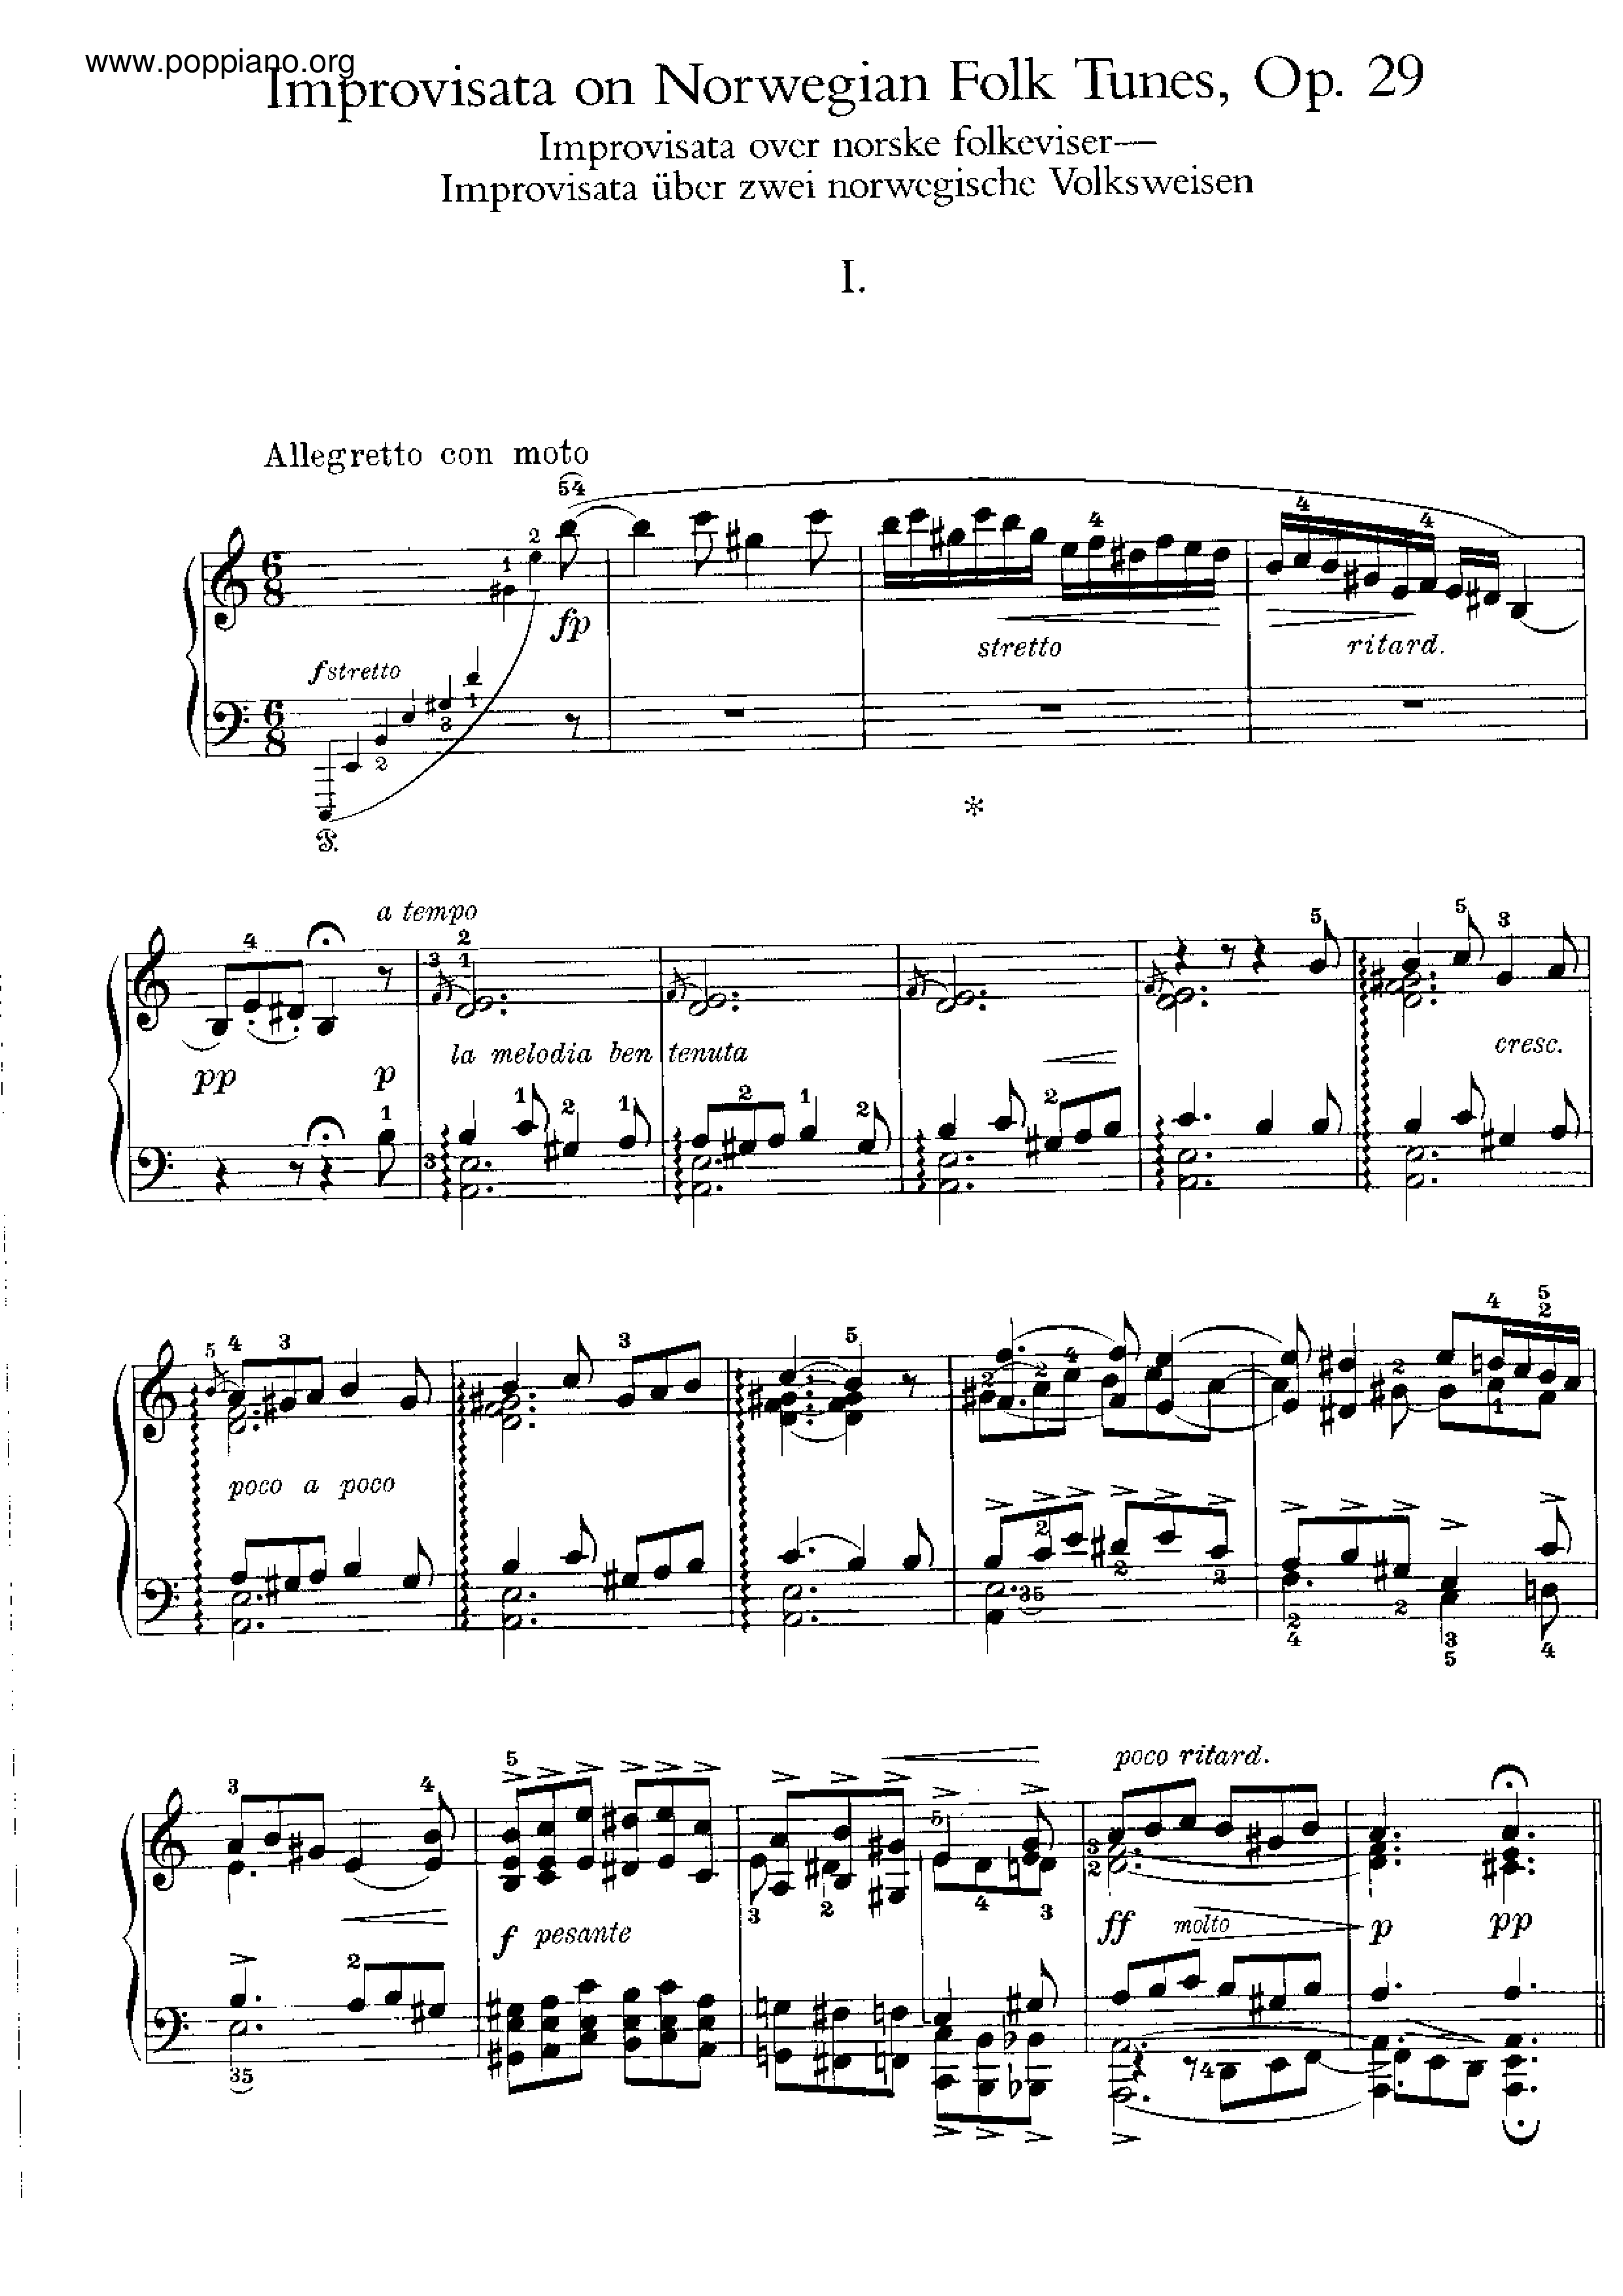 Improvisations on 2 Norwegian Folk Song,s, Op.29琴谱